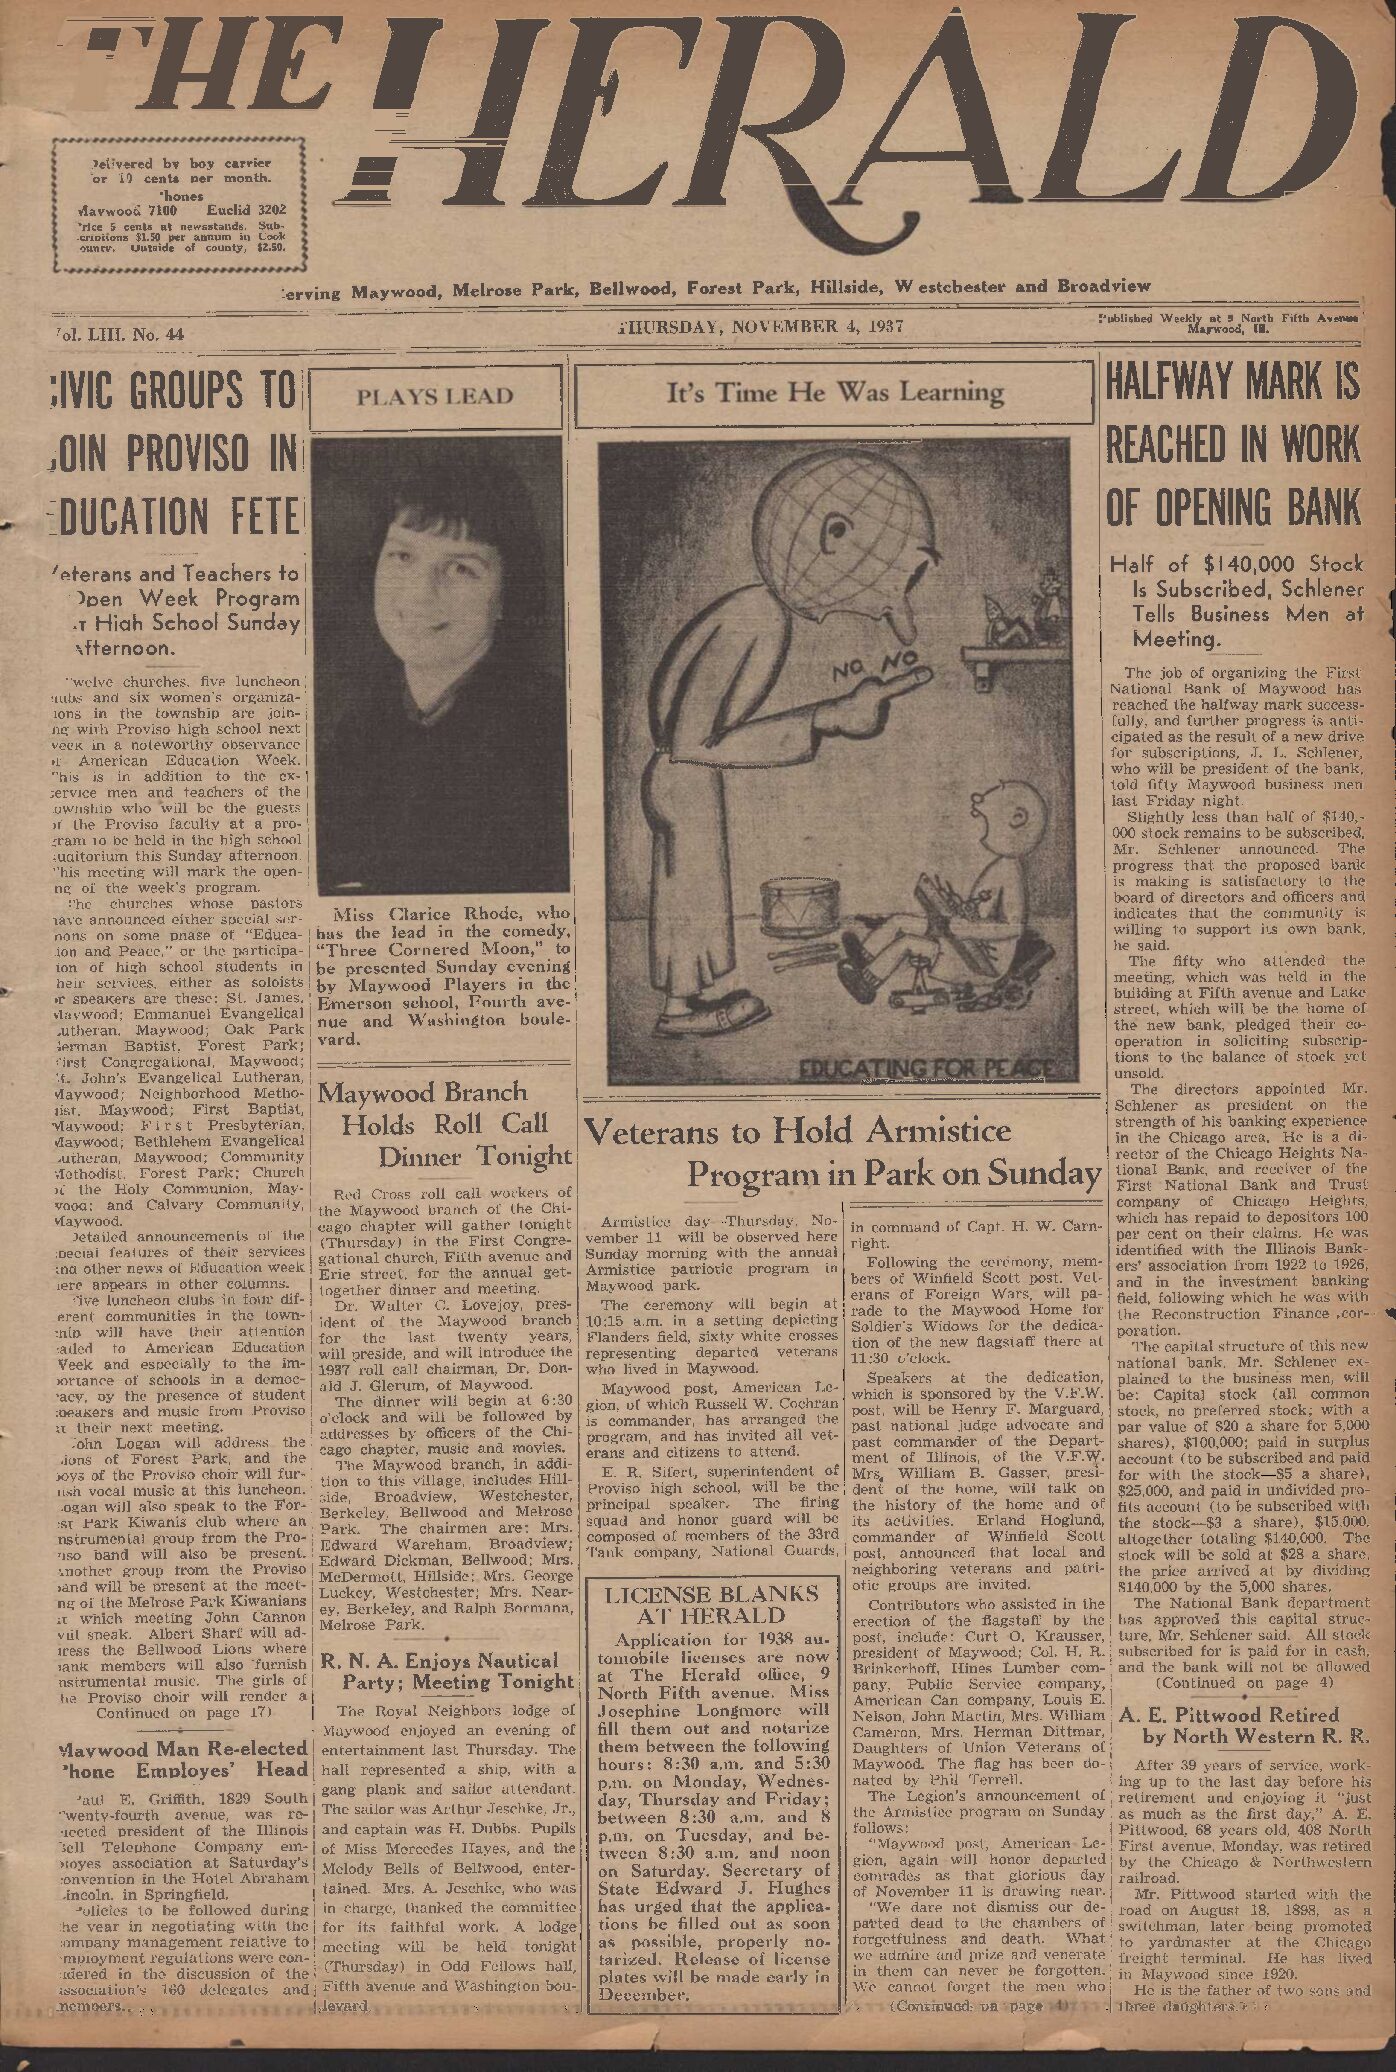 The Herald – 19371104